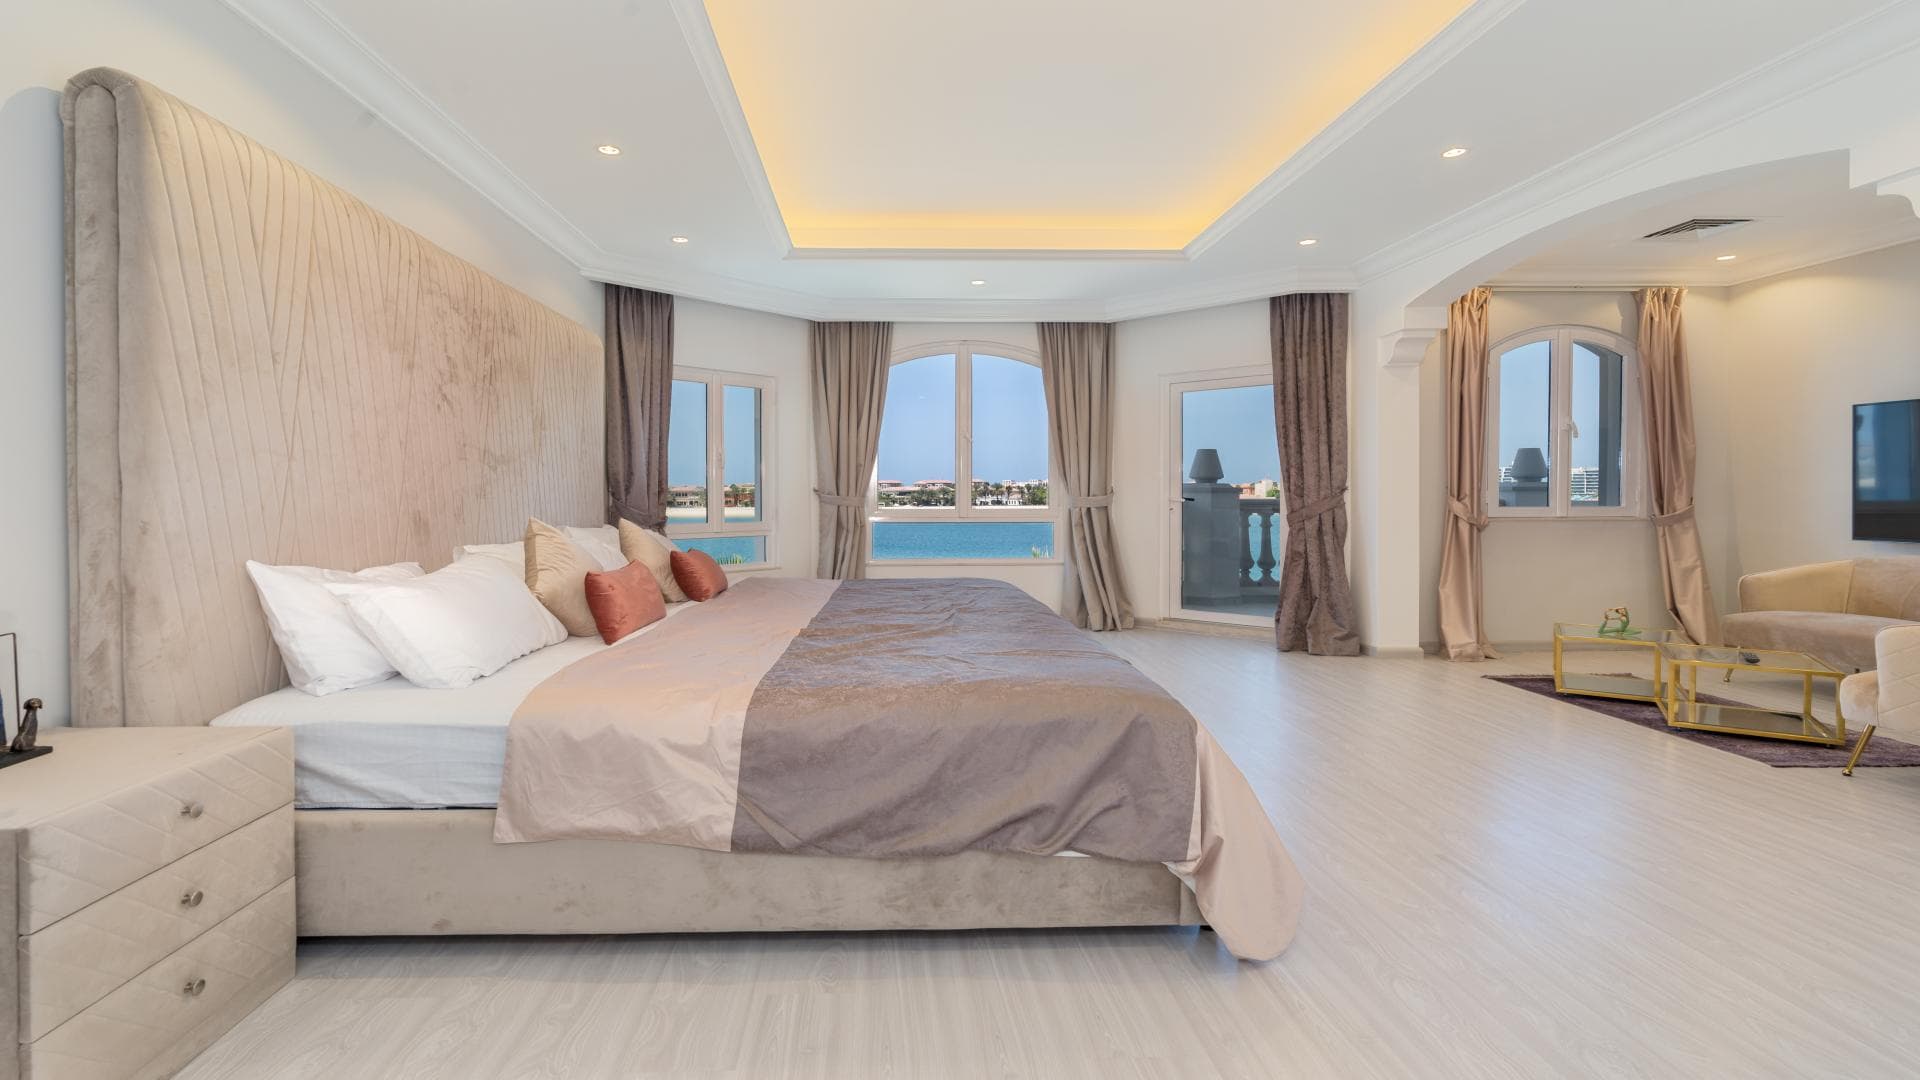 4 Bedroom Villa For Rent Mughal Lp36827 23b3c673986b8c00.jpg